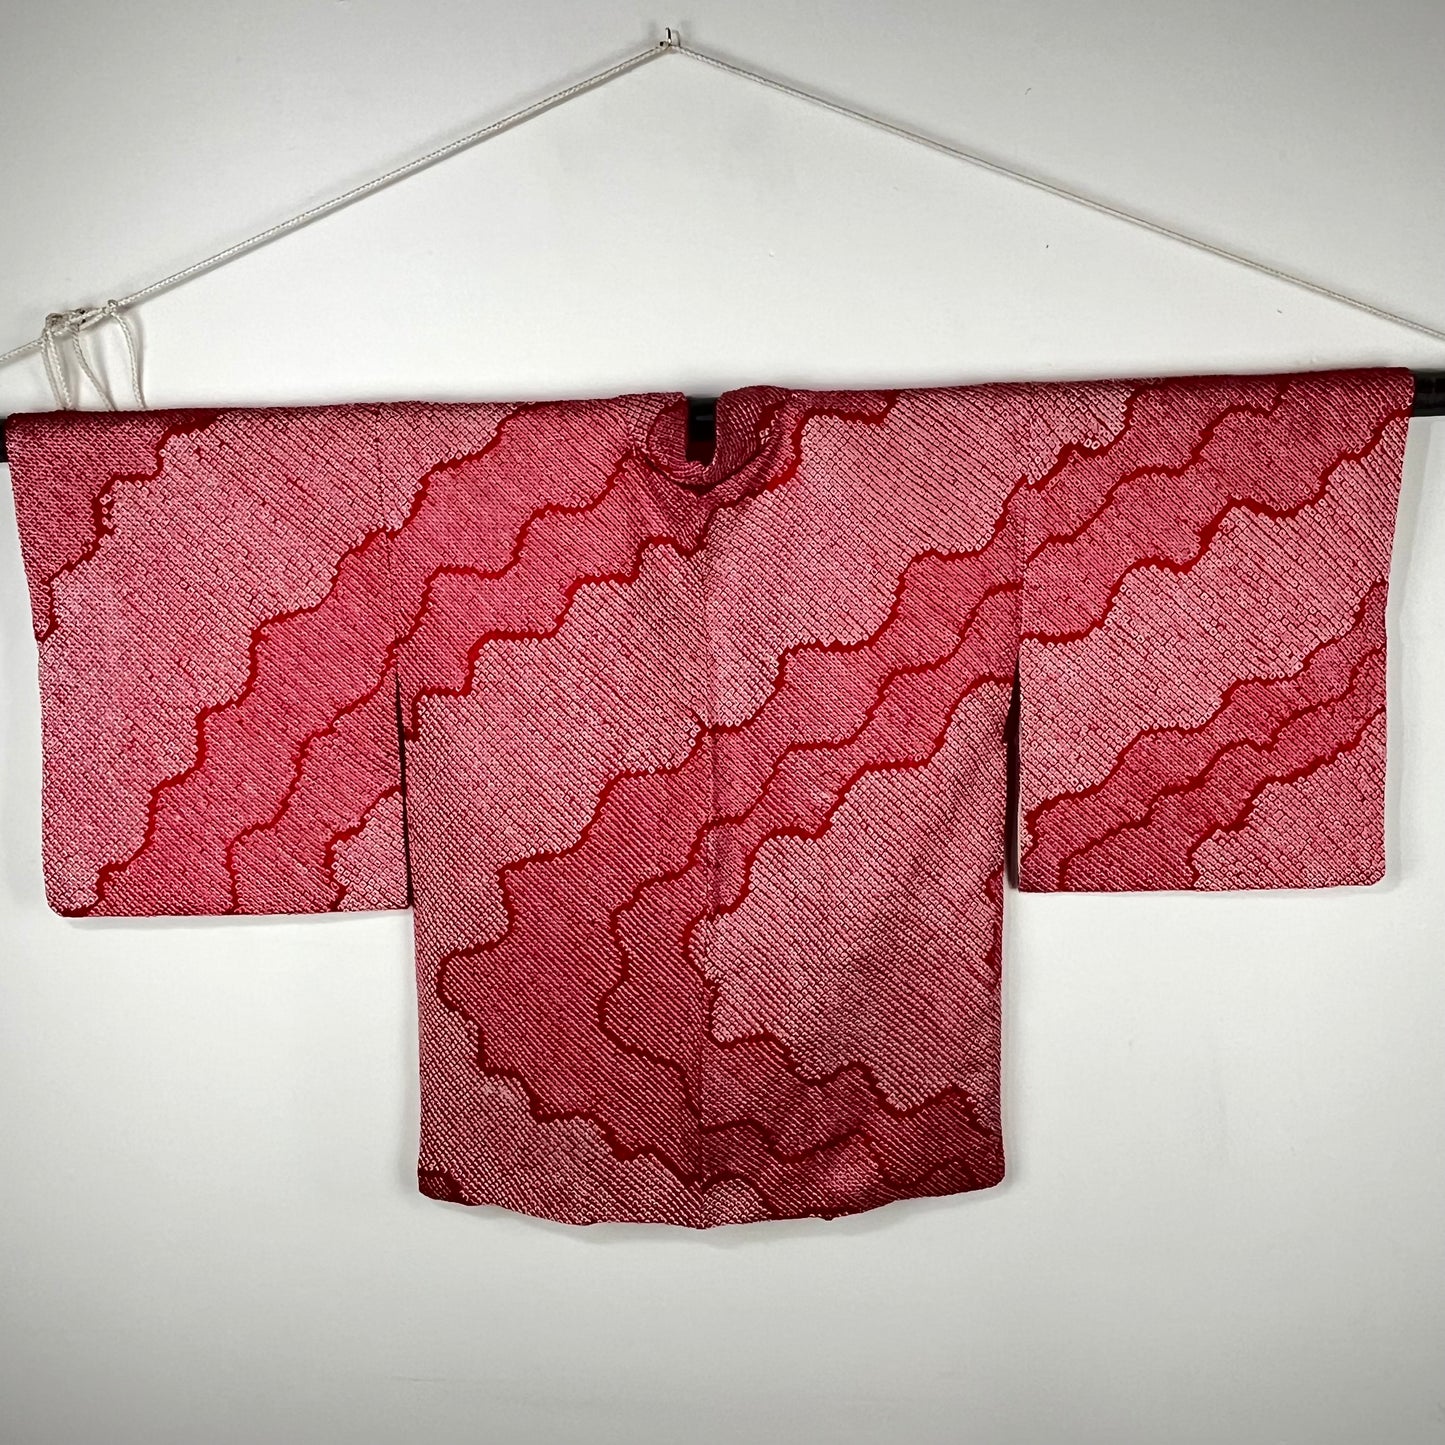 Copy of Vintage Japanese Silk Haori Coat in Shibori Tie-dye Bright Red Wavy Pattern 28"L